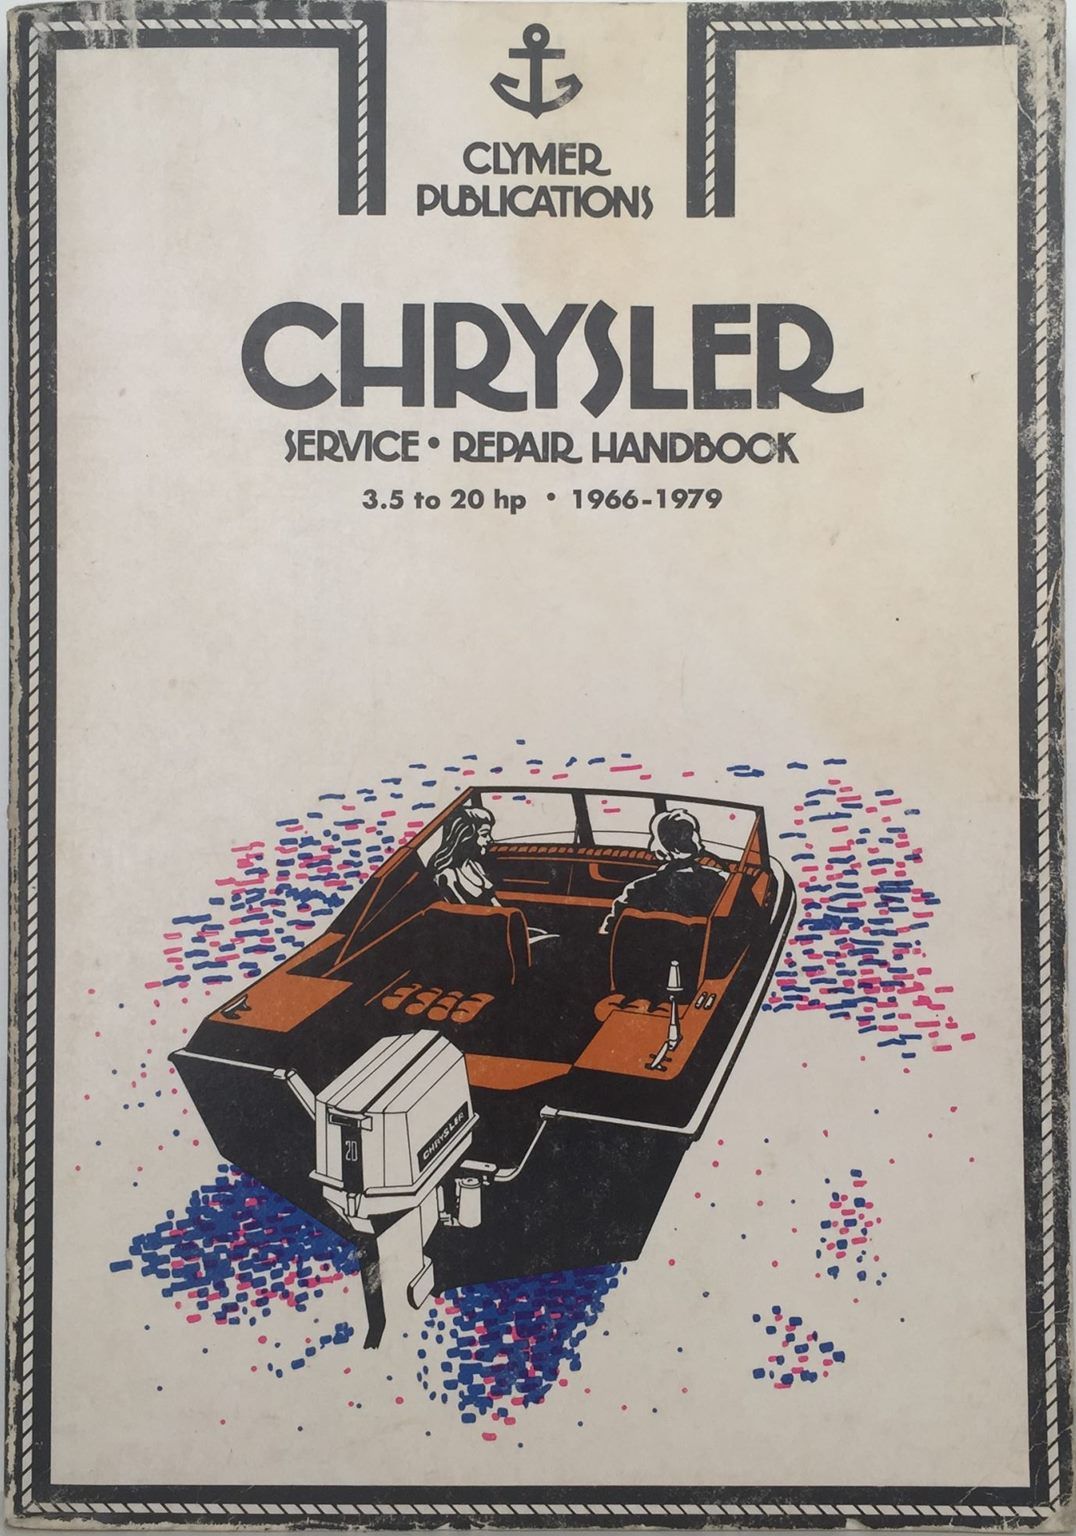 CHRYSLER OUTBOARD MOTOR: Service and Repair Handbook 1966-1979